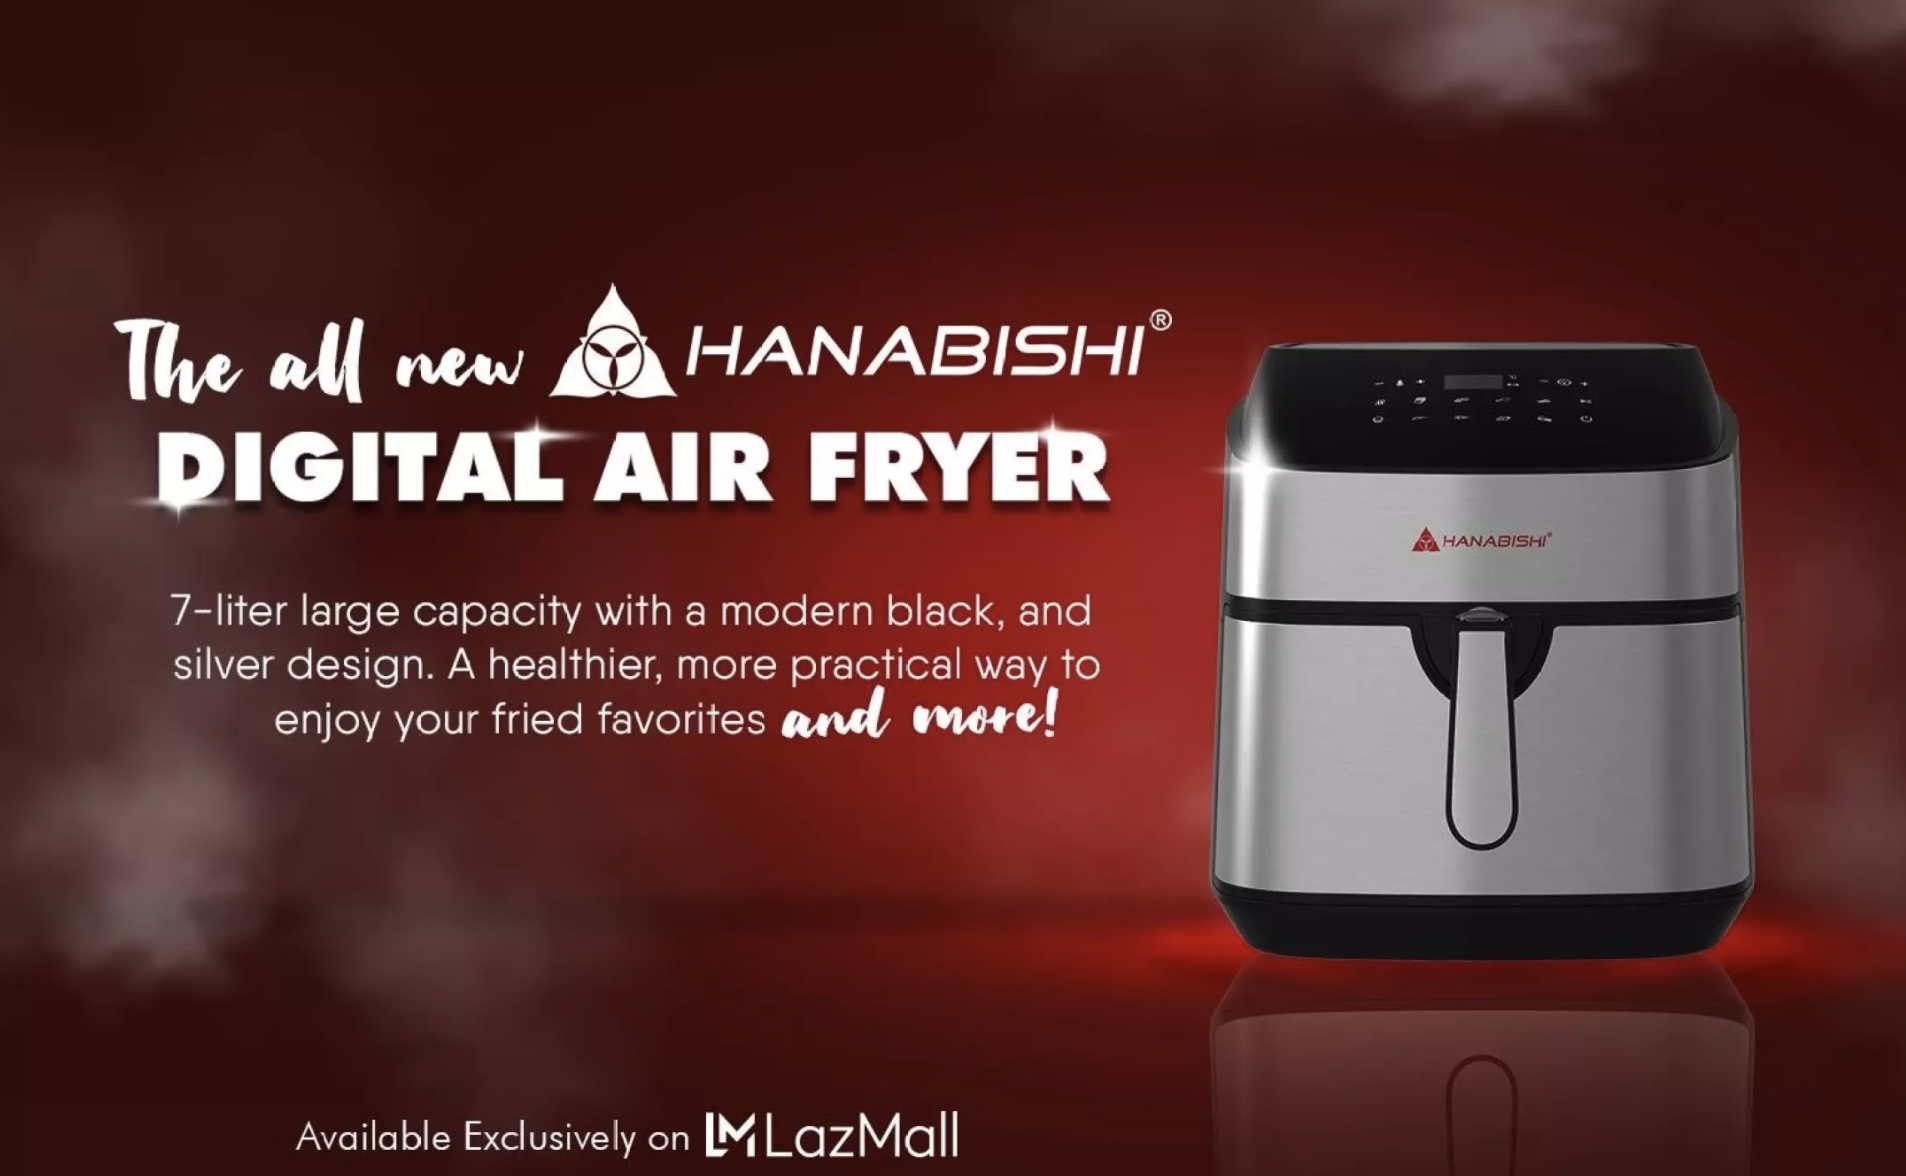 Hanabishi Digital Air Fryer